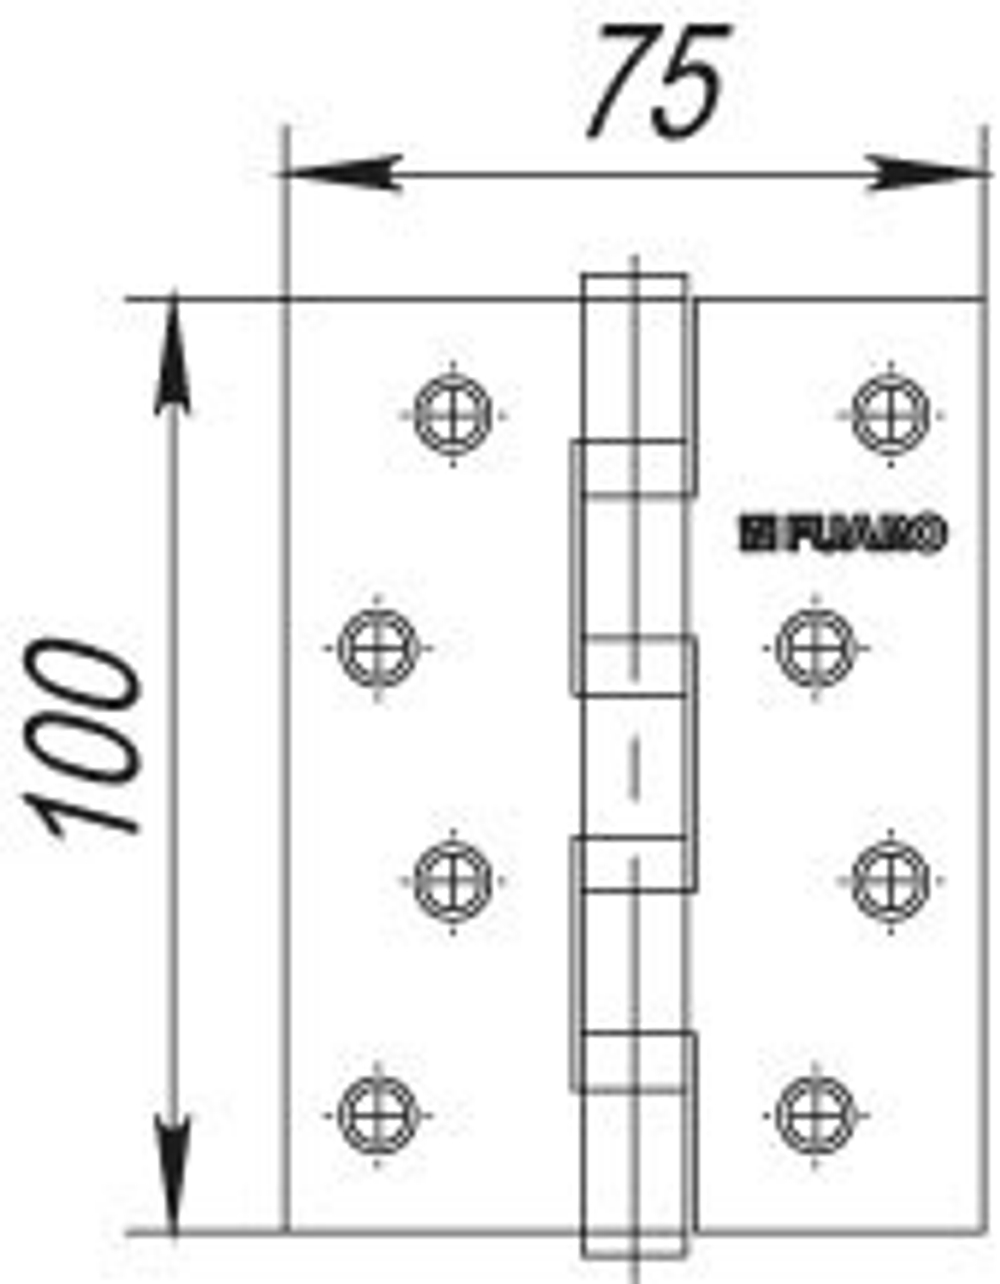 Петля универсальная Fuaro (Фуаро) 4BB/BL 100x75x2,5 BL (чёрный матовый) БЛИСТЕР